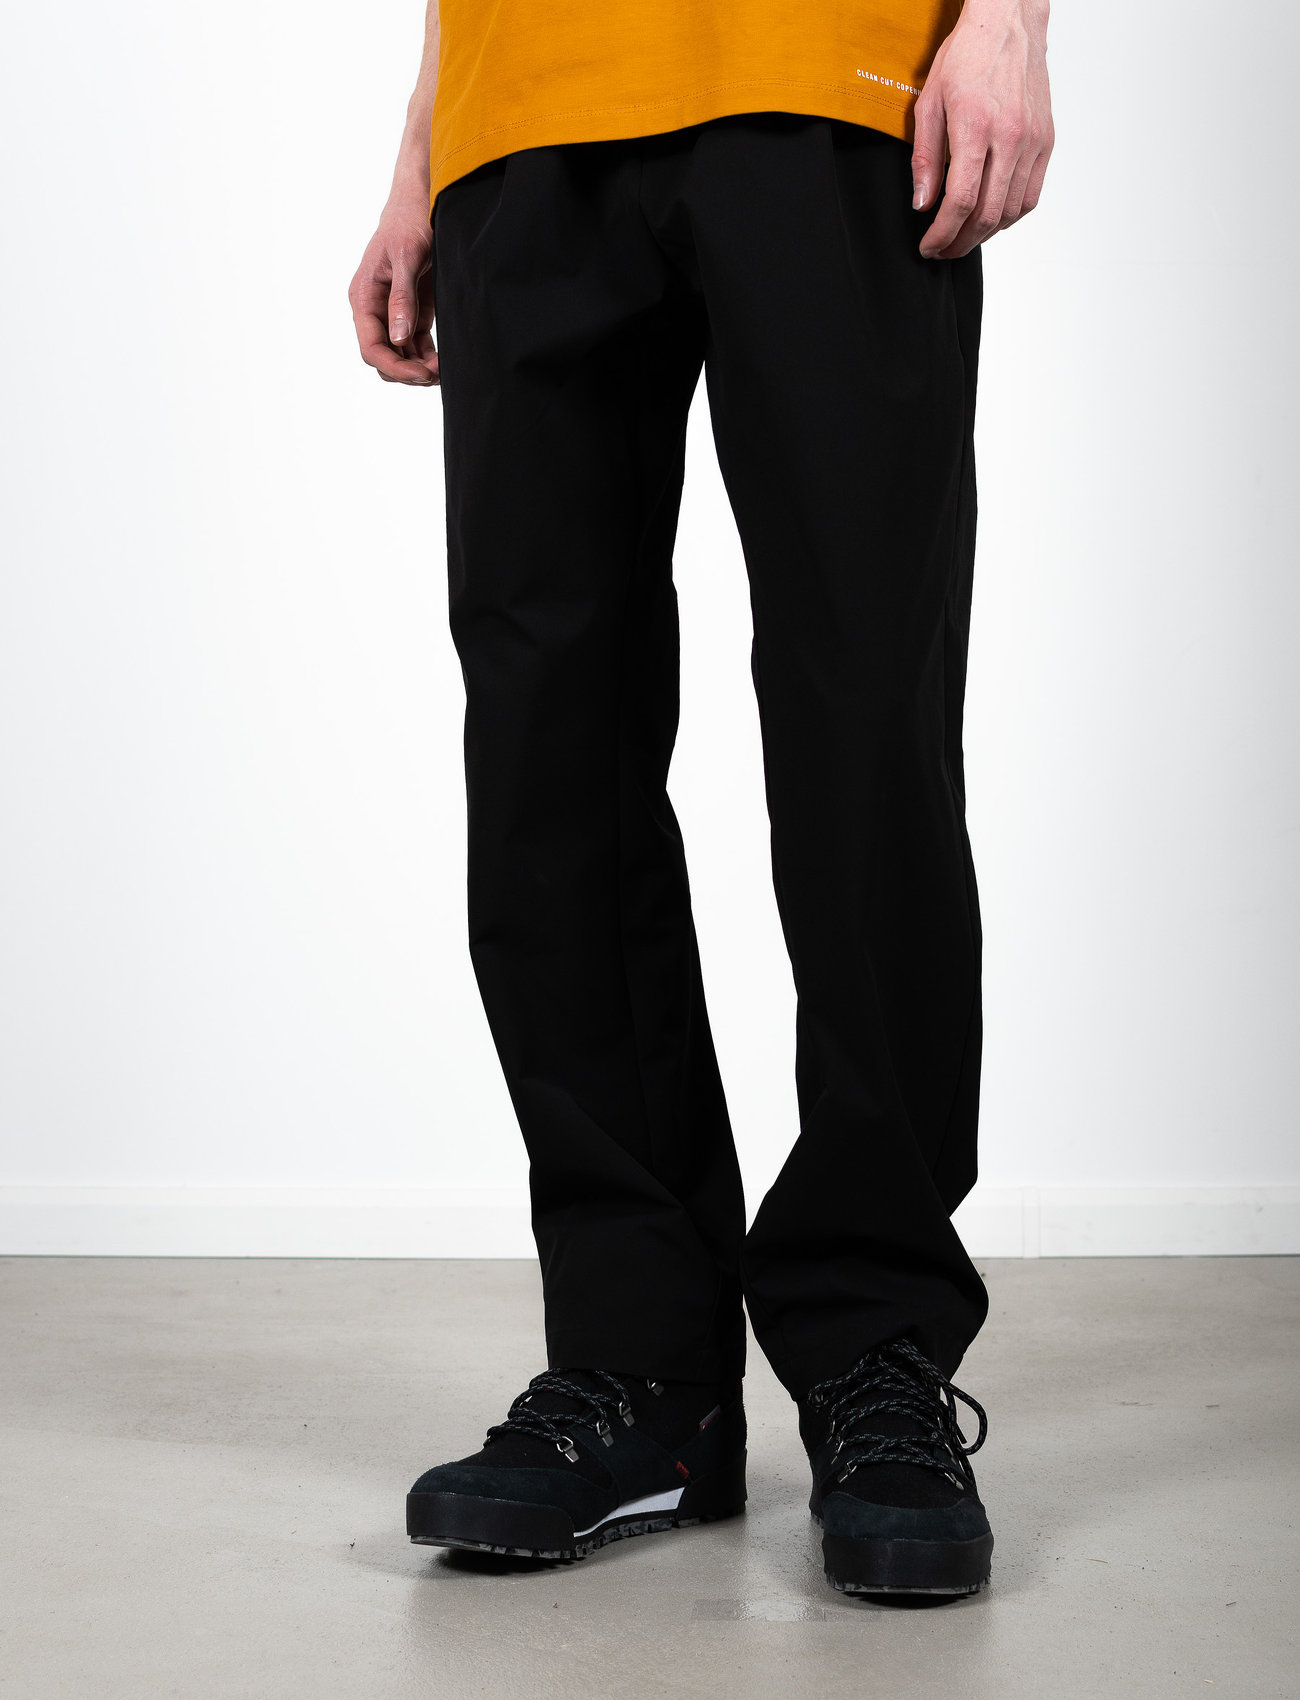 Clean Cut Copenhagen - Ruben Stretch Pants - casual - black - 1